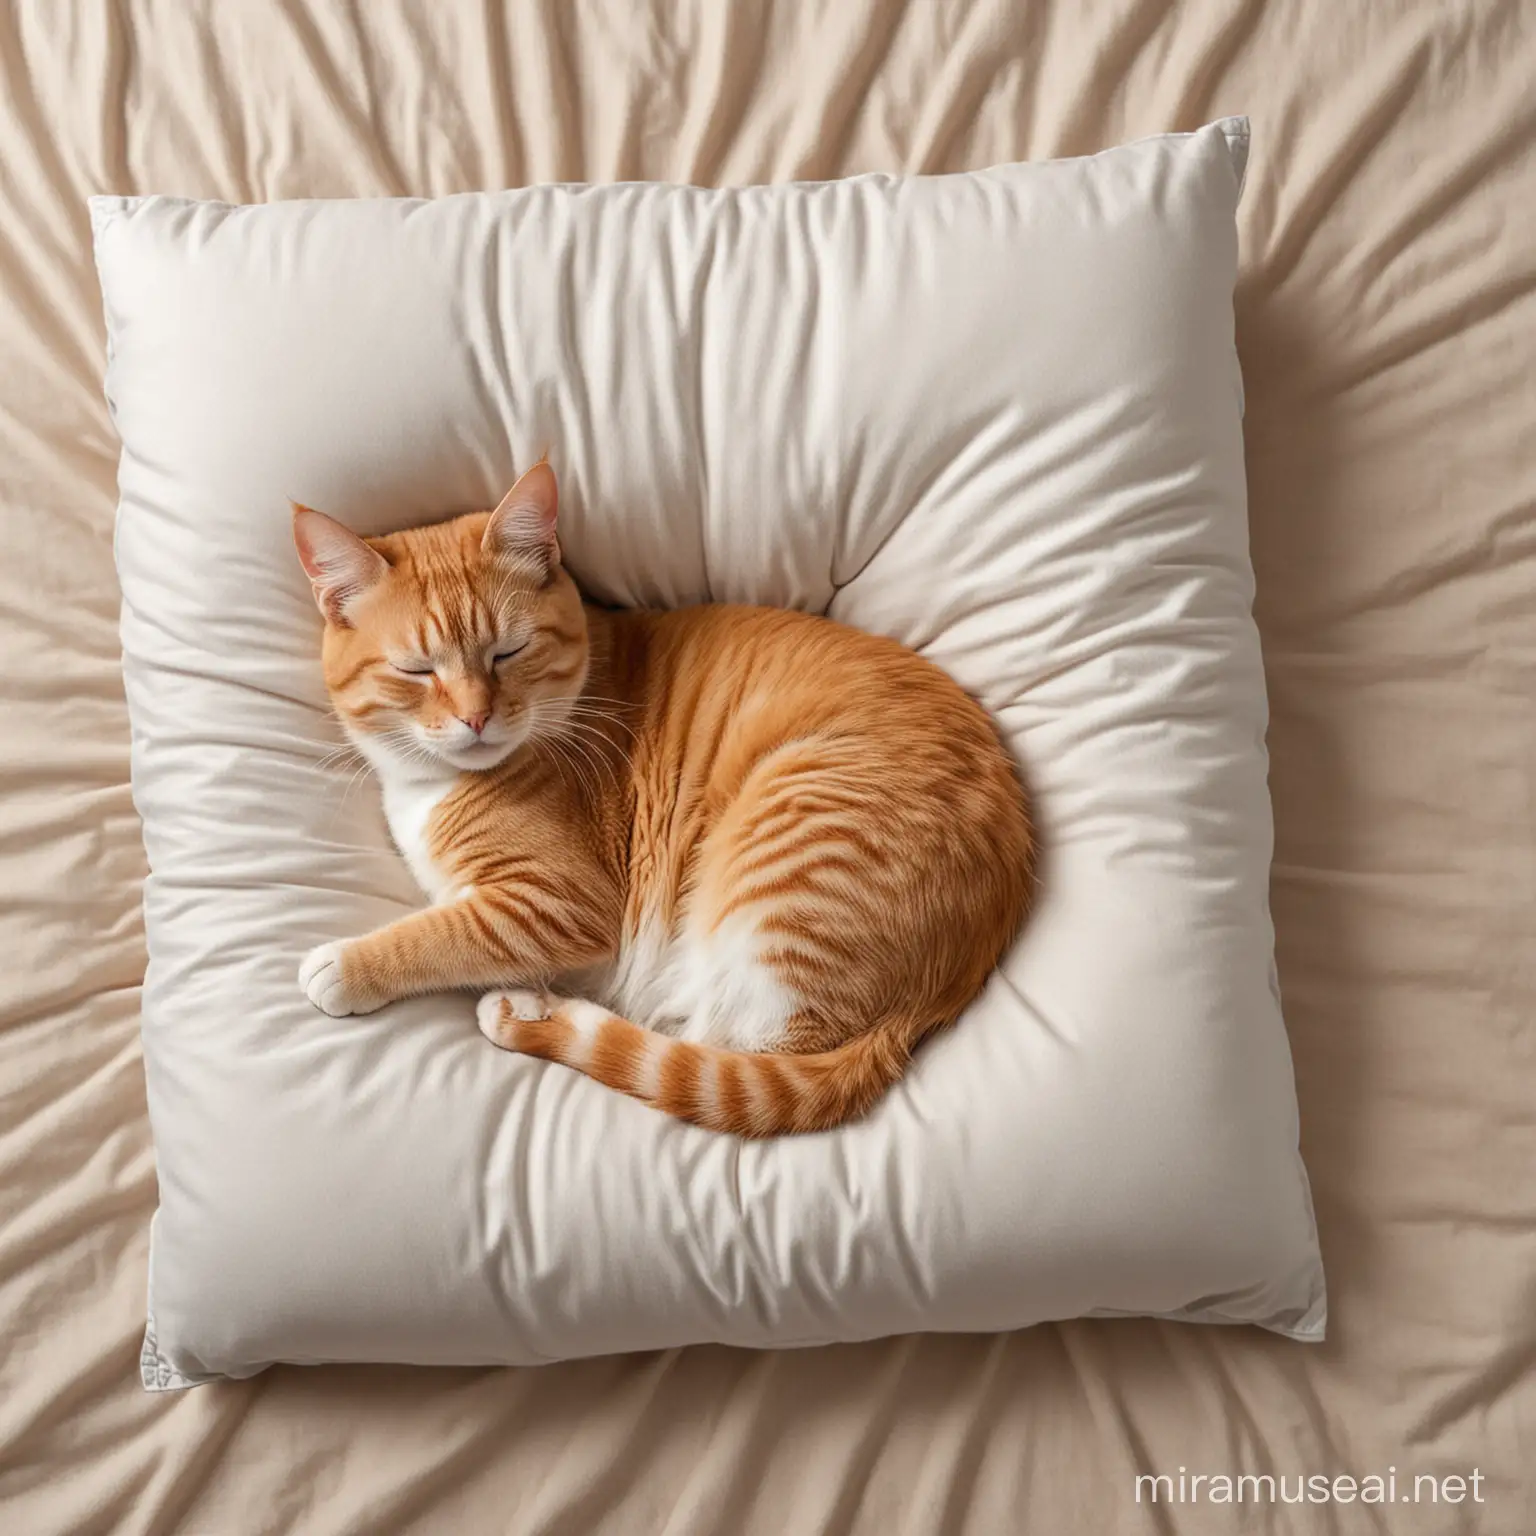 Sleeping Cat on Soft Pillow Belly Up Tranquil Feline Resting Scene